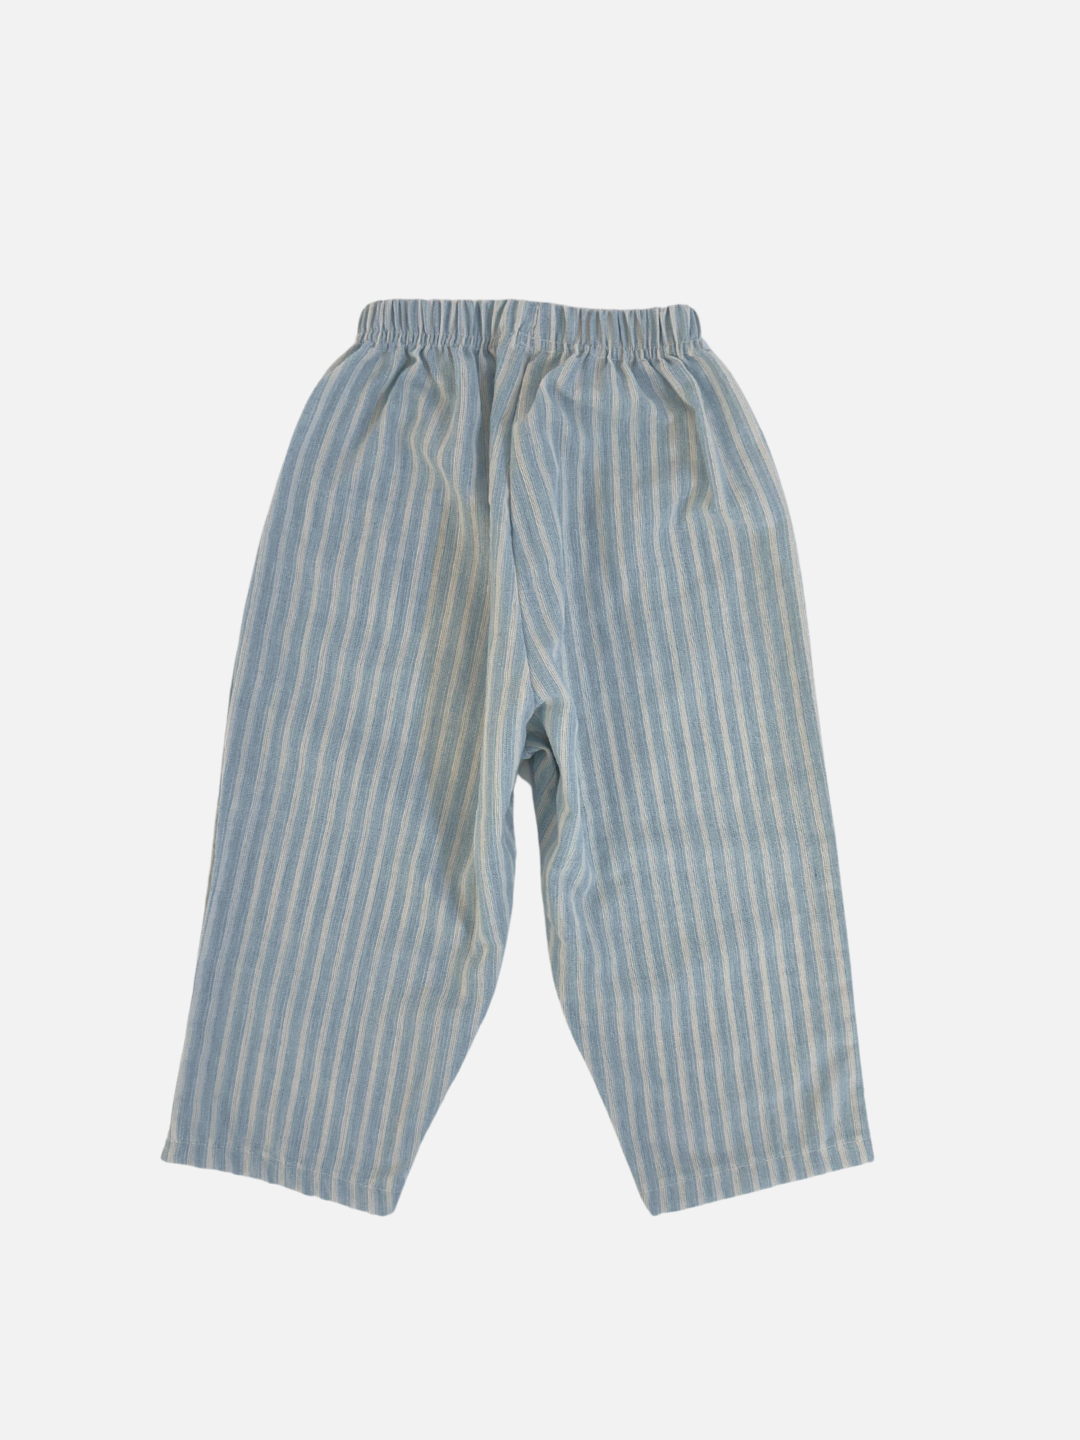 A back view of kids' Pocket Stripe Pant in 100% Cotton in light blue stripe